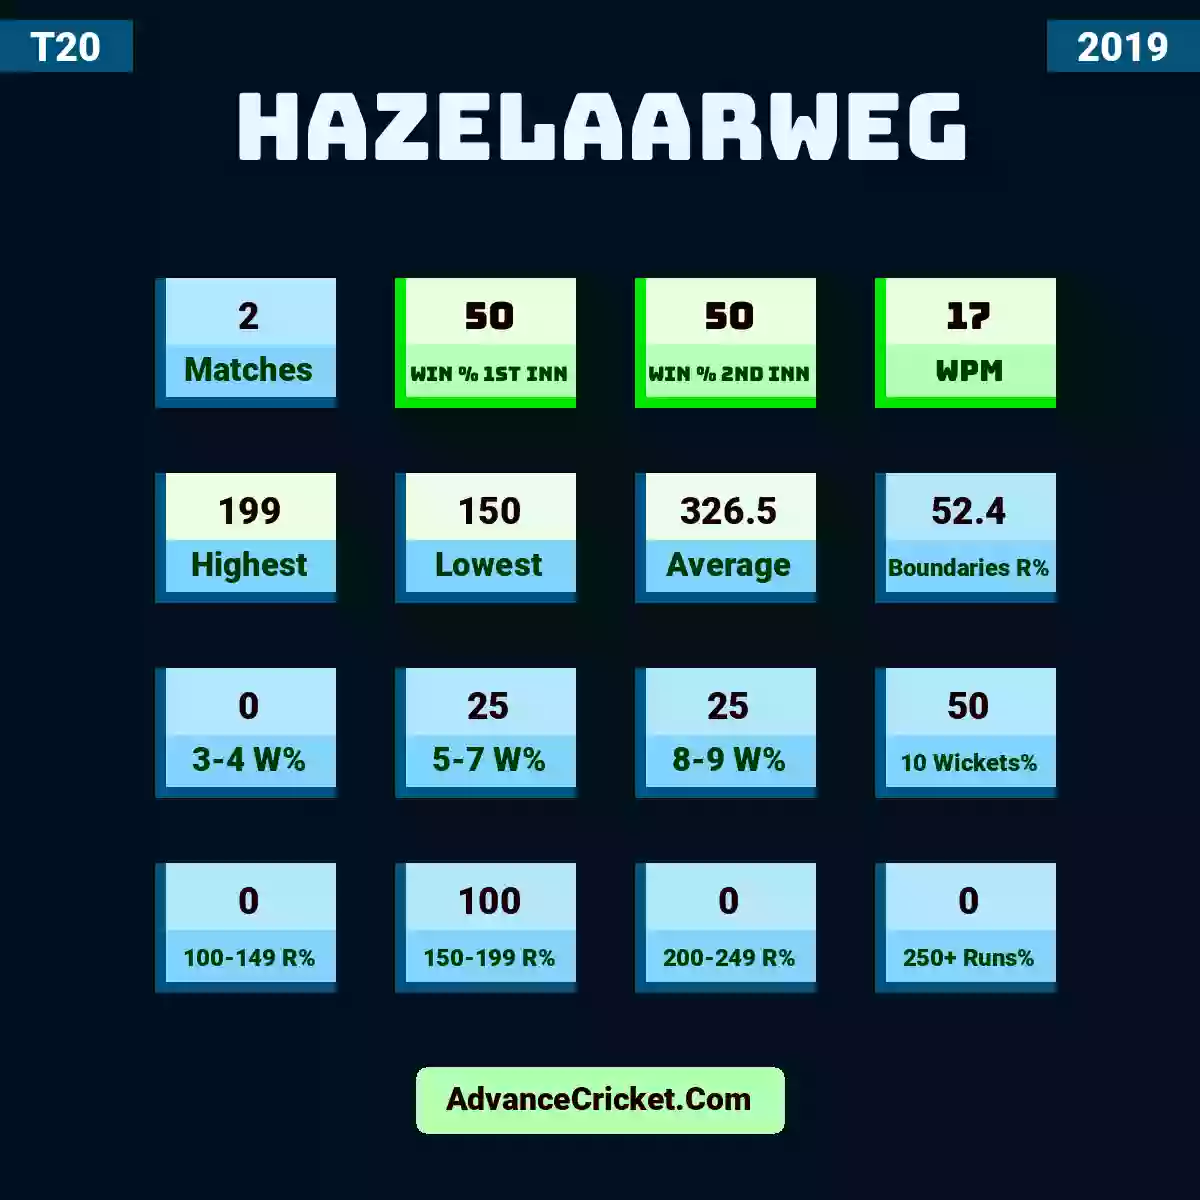 Image showing Hazelaarweg with Matches: 2, Win % 1st Inn: 50, Win % 2nd Inn: 50, WPM: 17, Highest: 199, Lowest: 150, Average: 326.5, Boundaries R%: 52.4, 3-4 W%: 0, 5-7 W%: 25, 8-9 W%: 25, 10 Wickets%: 50, 100-149 R%: 0, 150-199 R%: 100, 200-249 R%: 0, 250+ Runs%: 0.